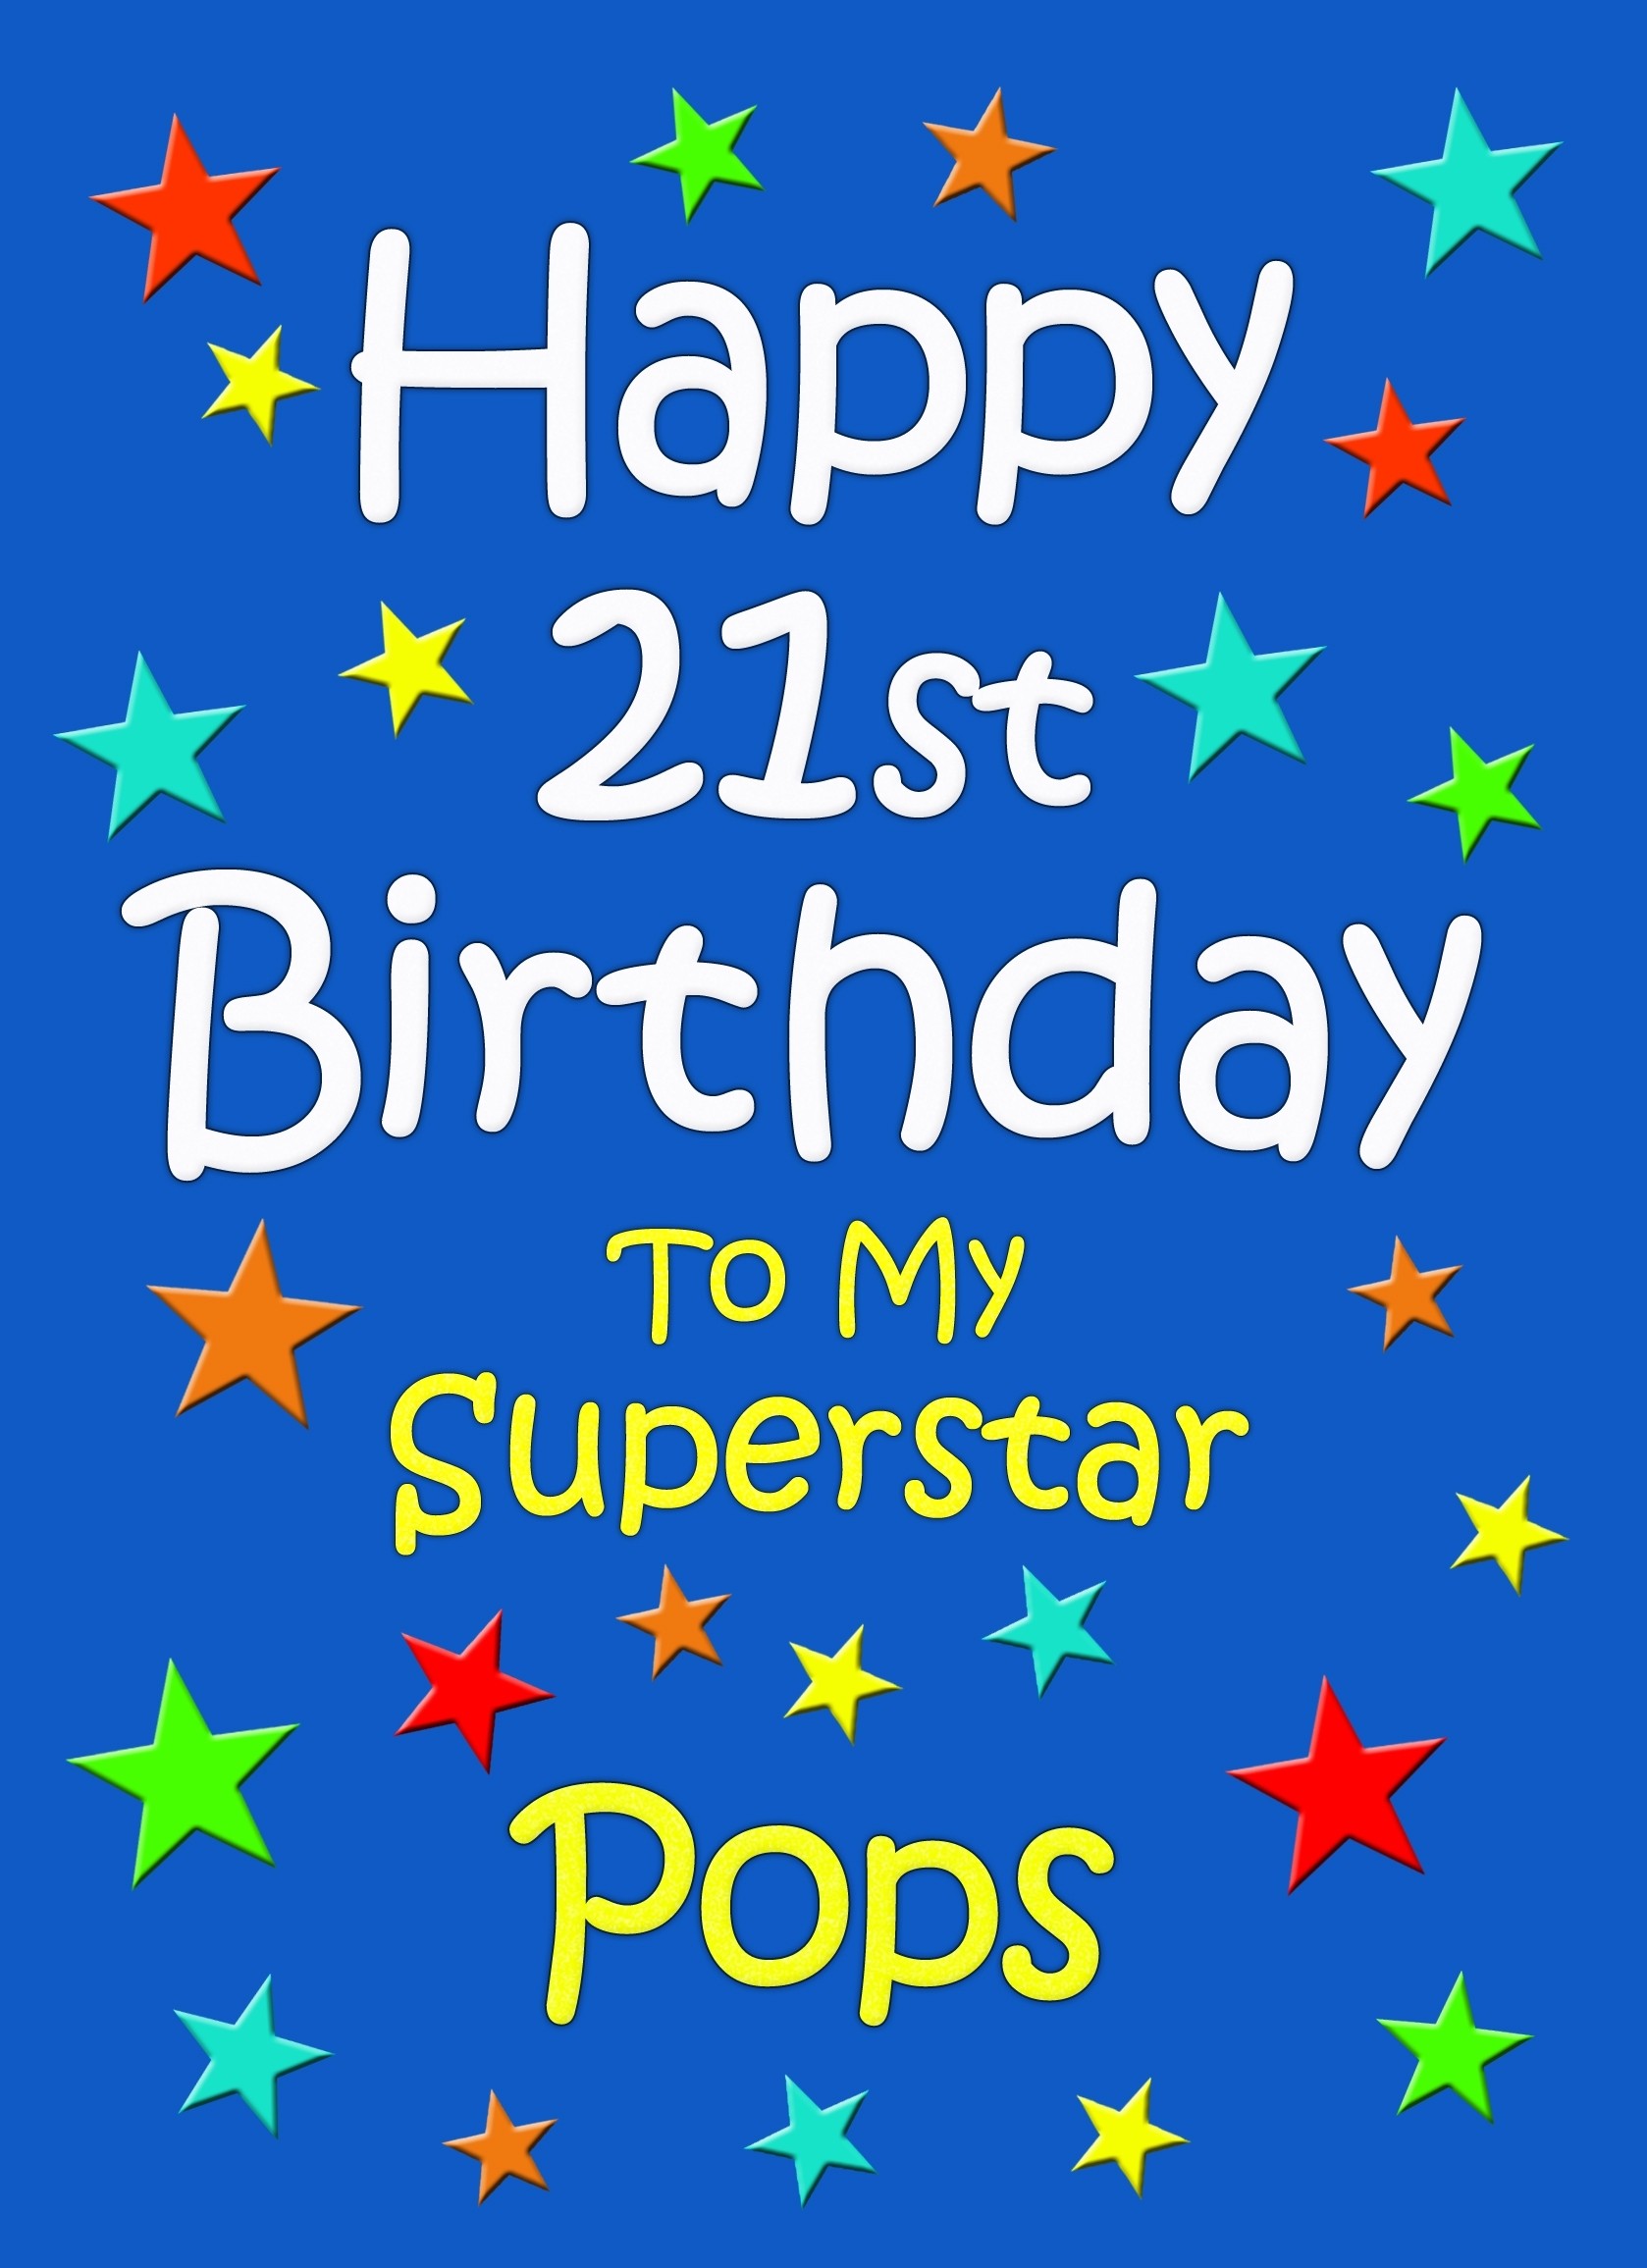 Pops 21st Birthday Card (Blue)